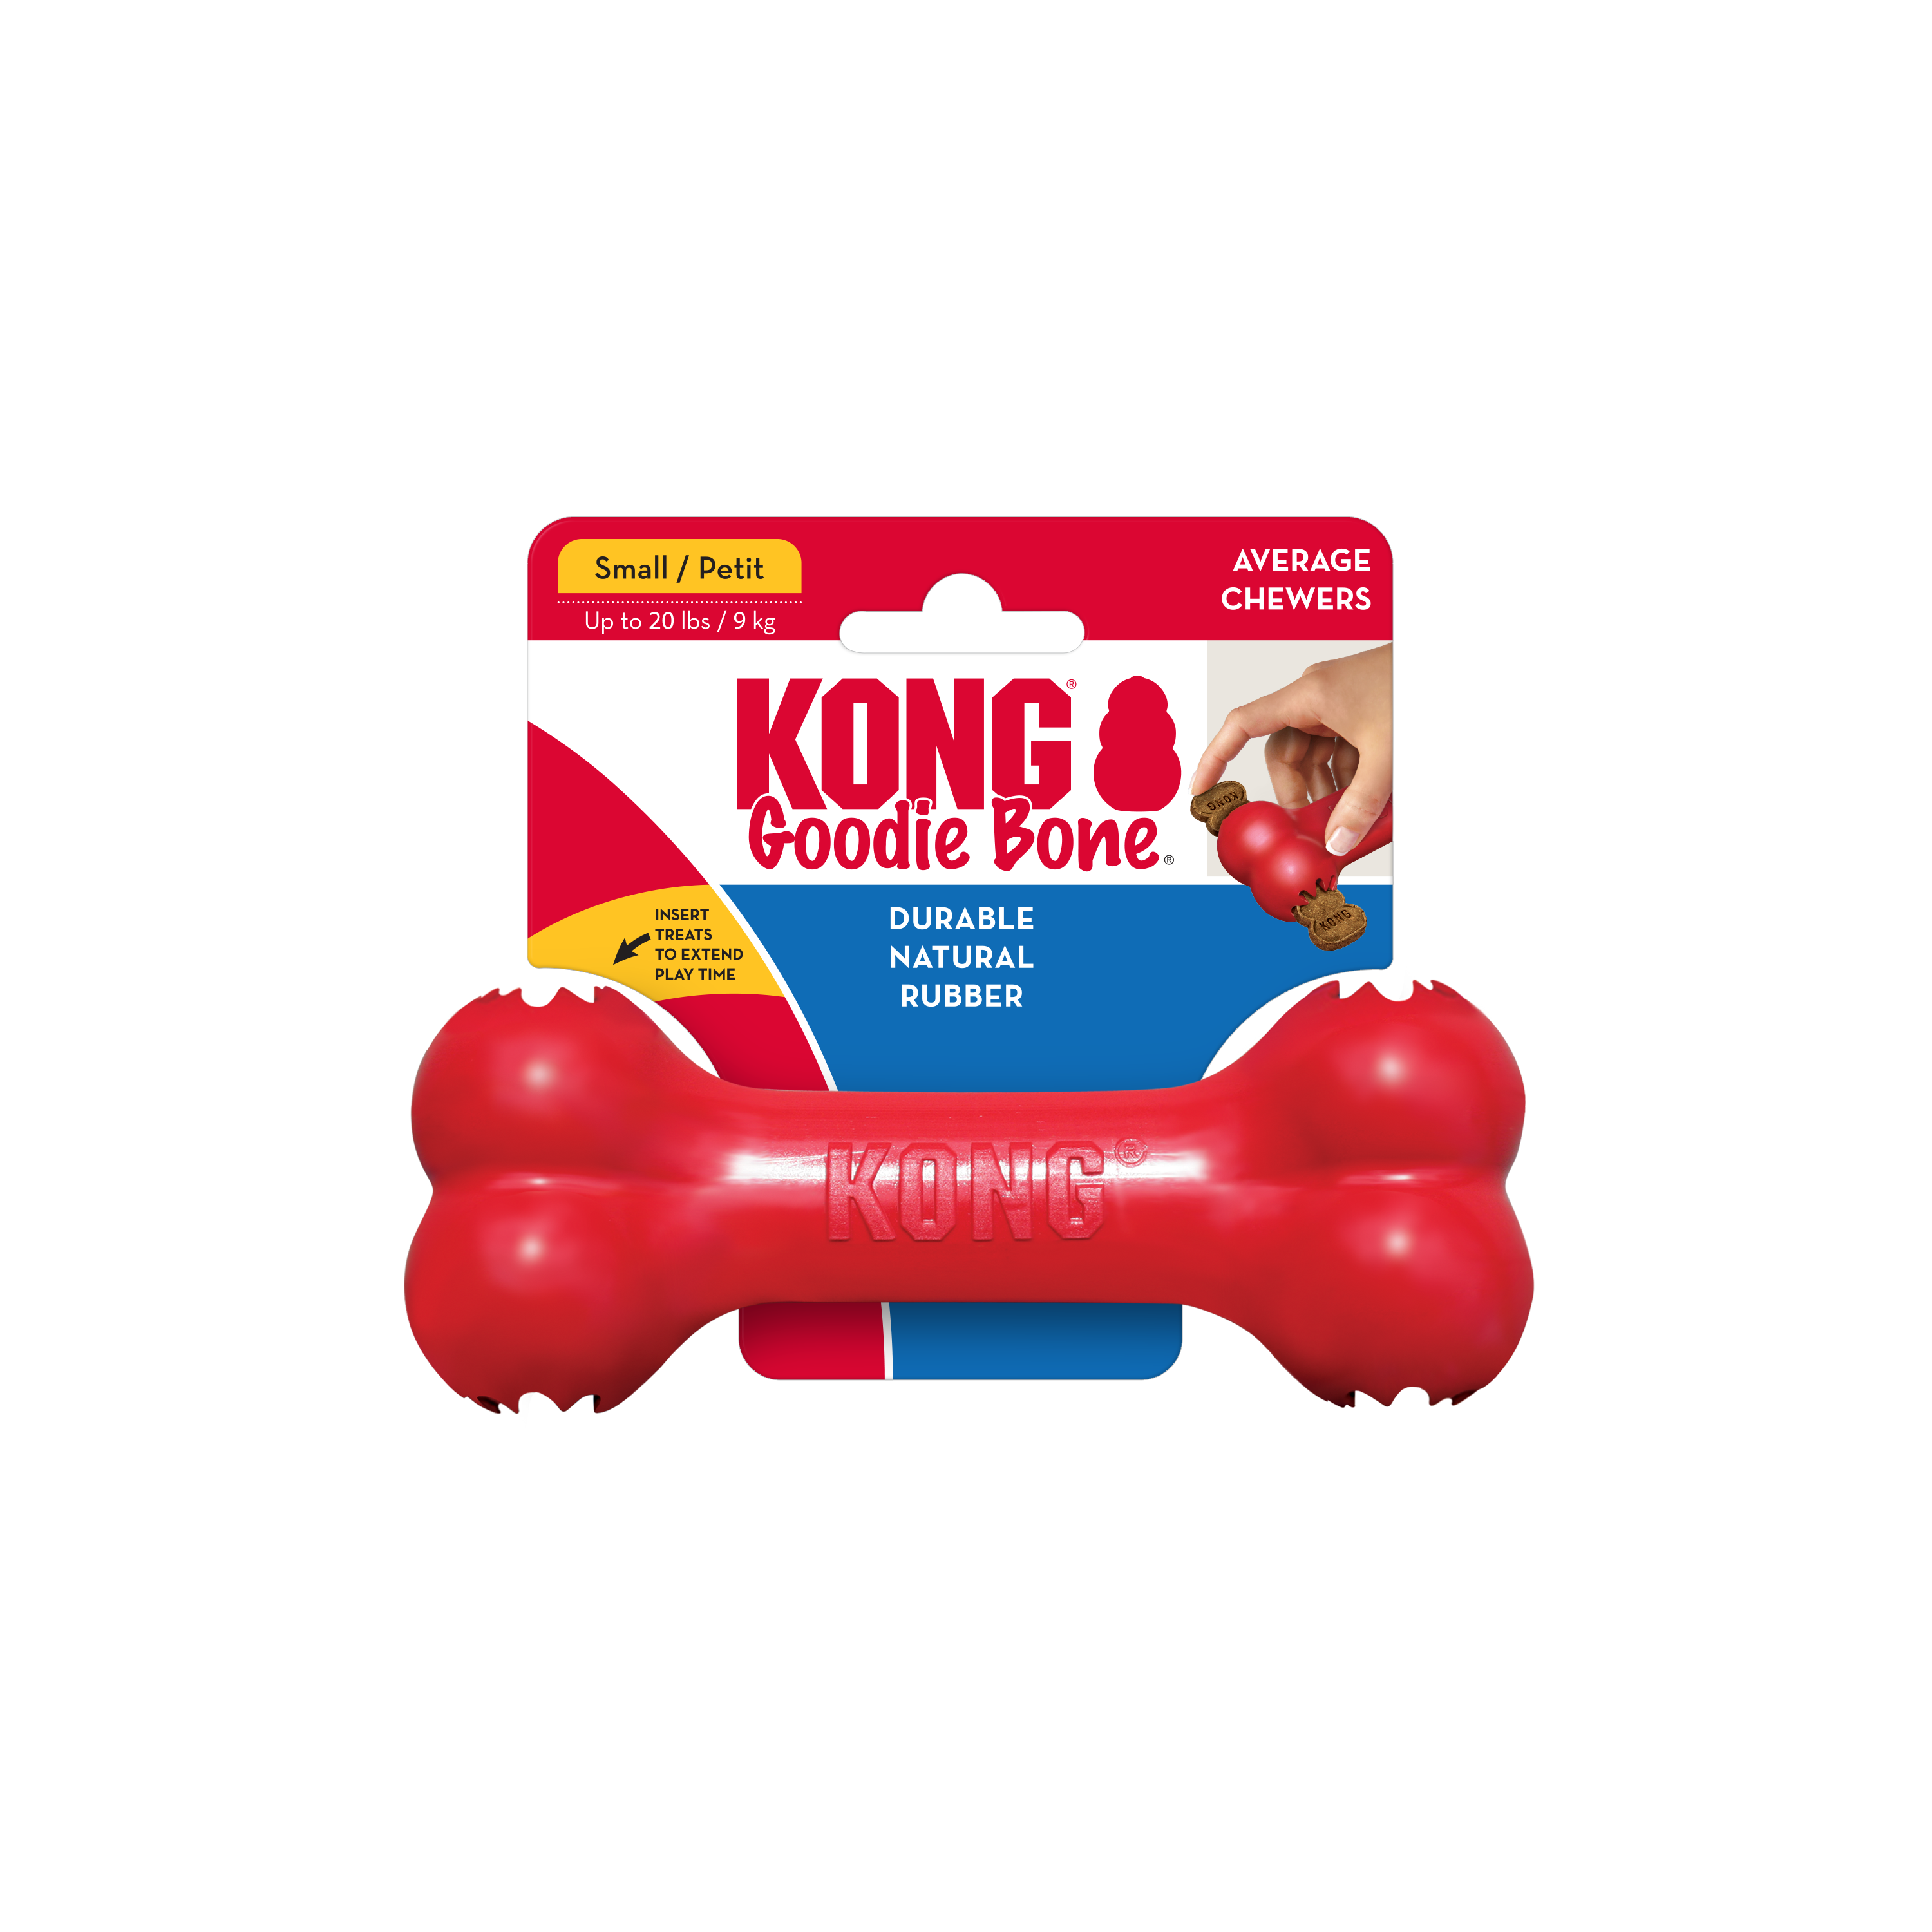 KONG Goodie Bone onpack imagen del producto